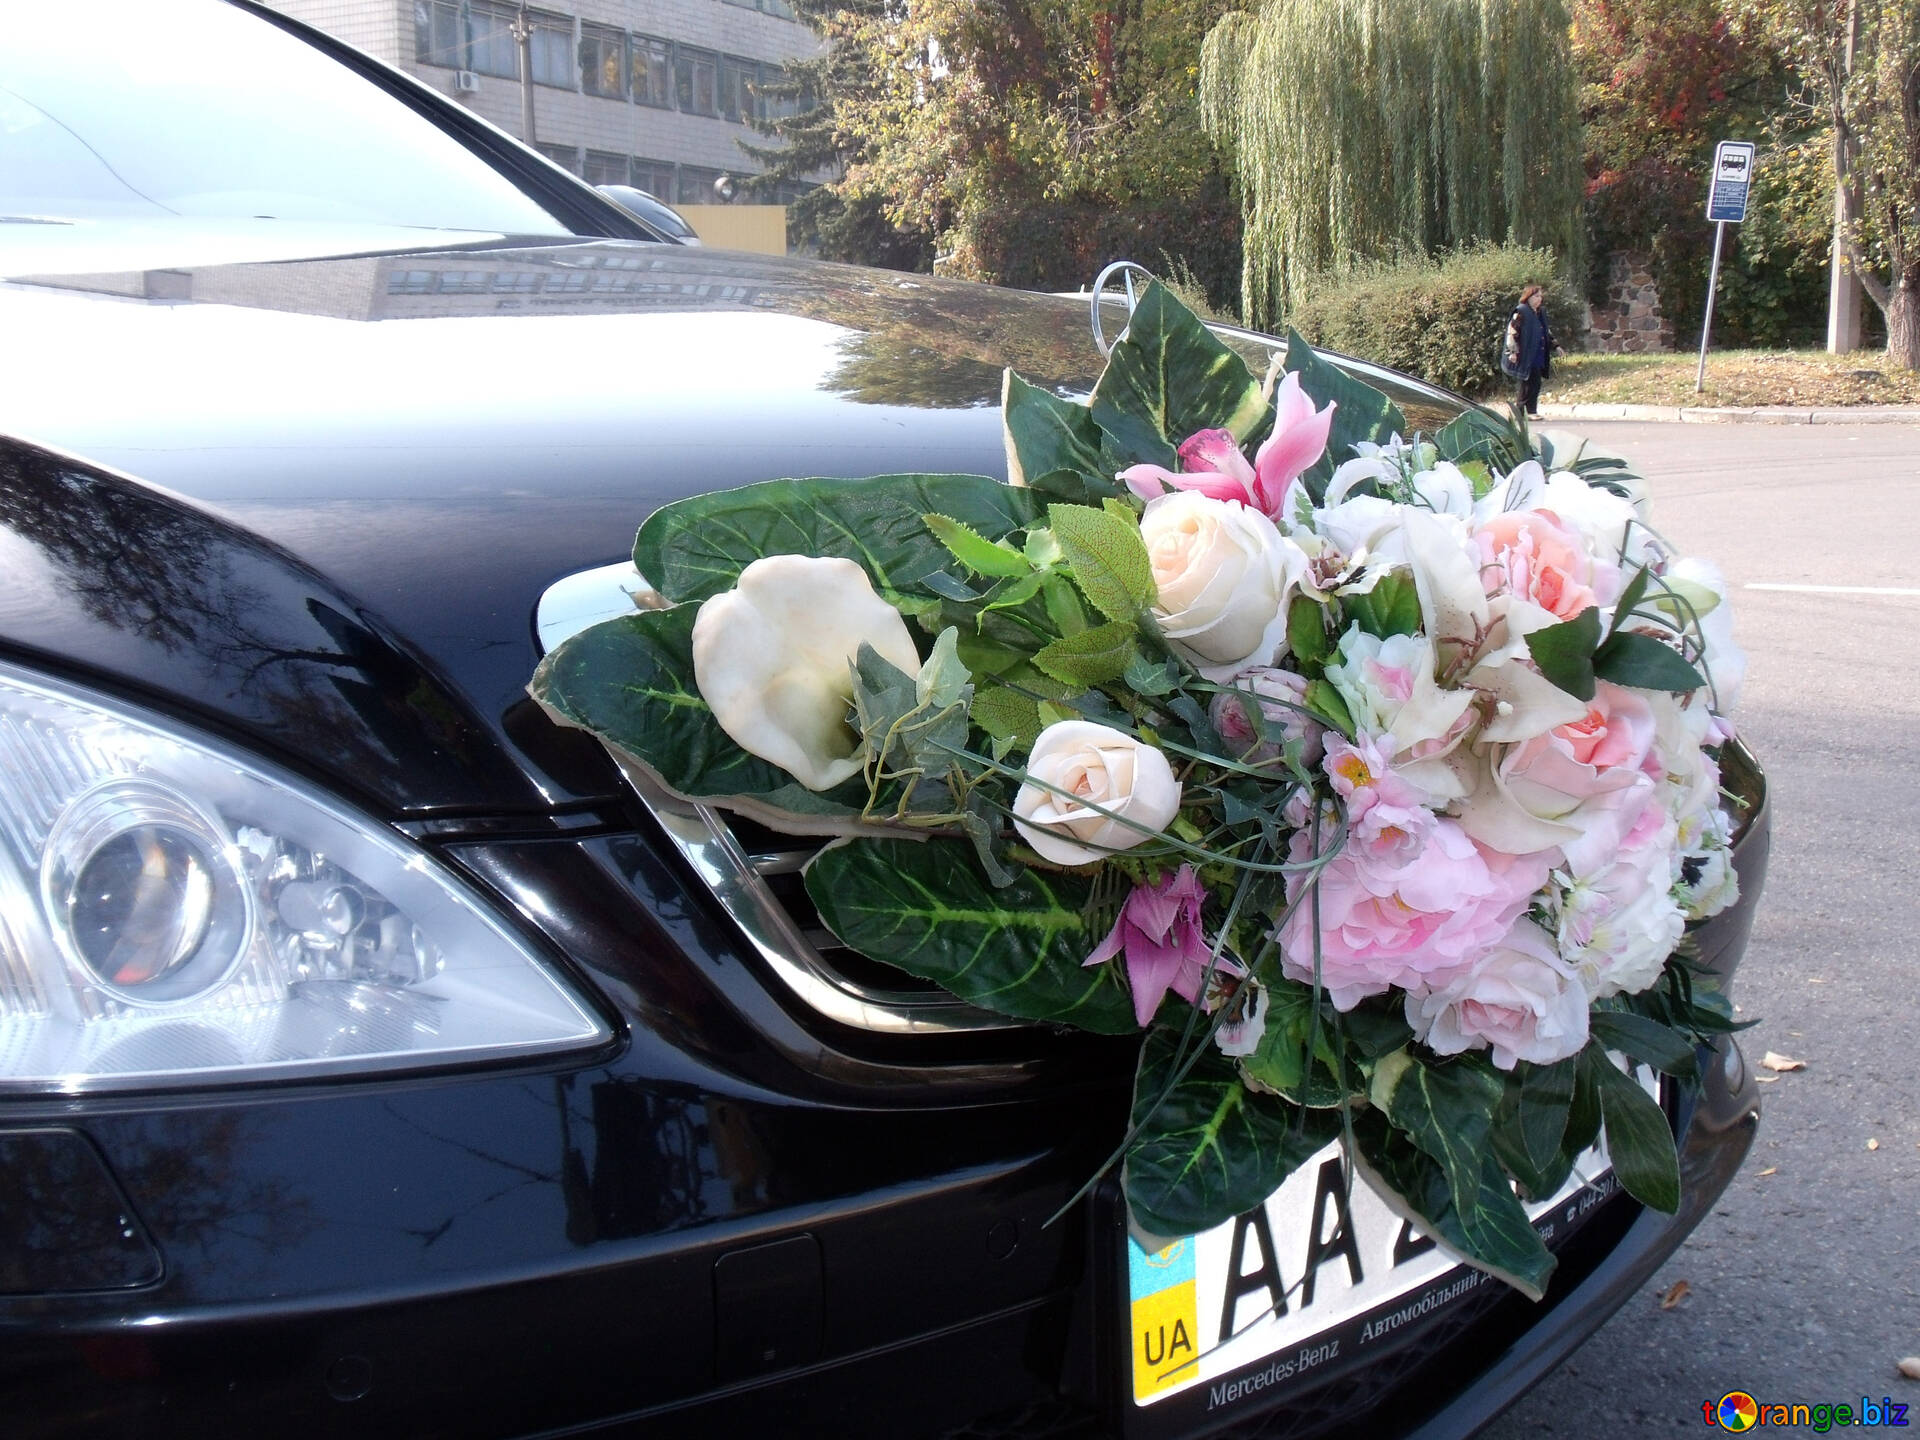 https://torange.biz/photo/10/HD/bouquet-wedding-decorations-cars-car-10094.jpg